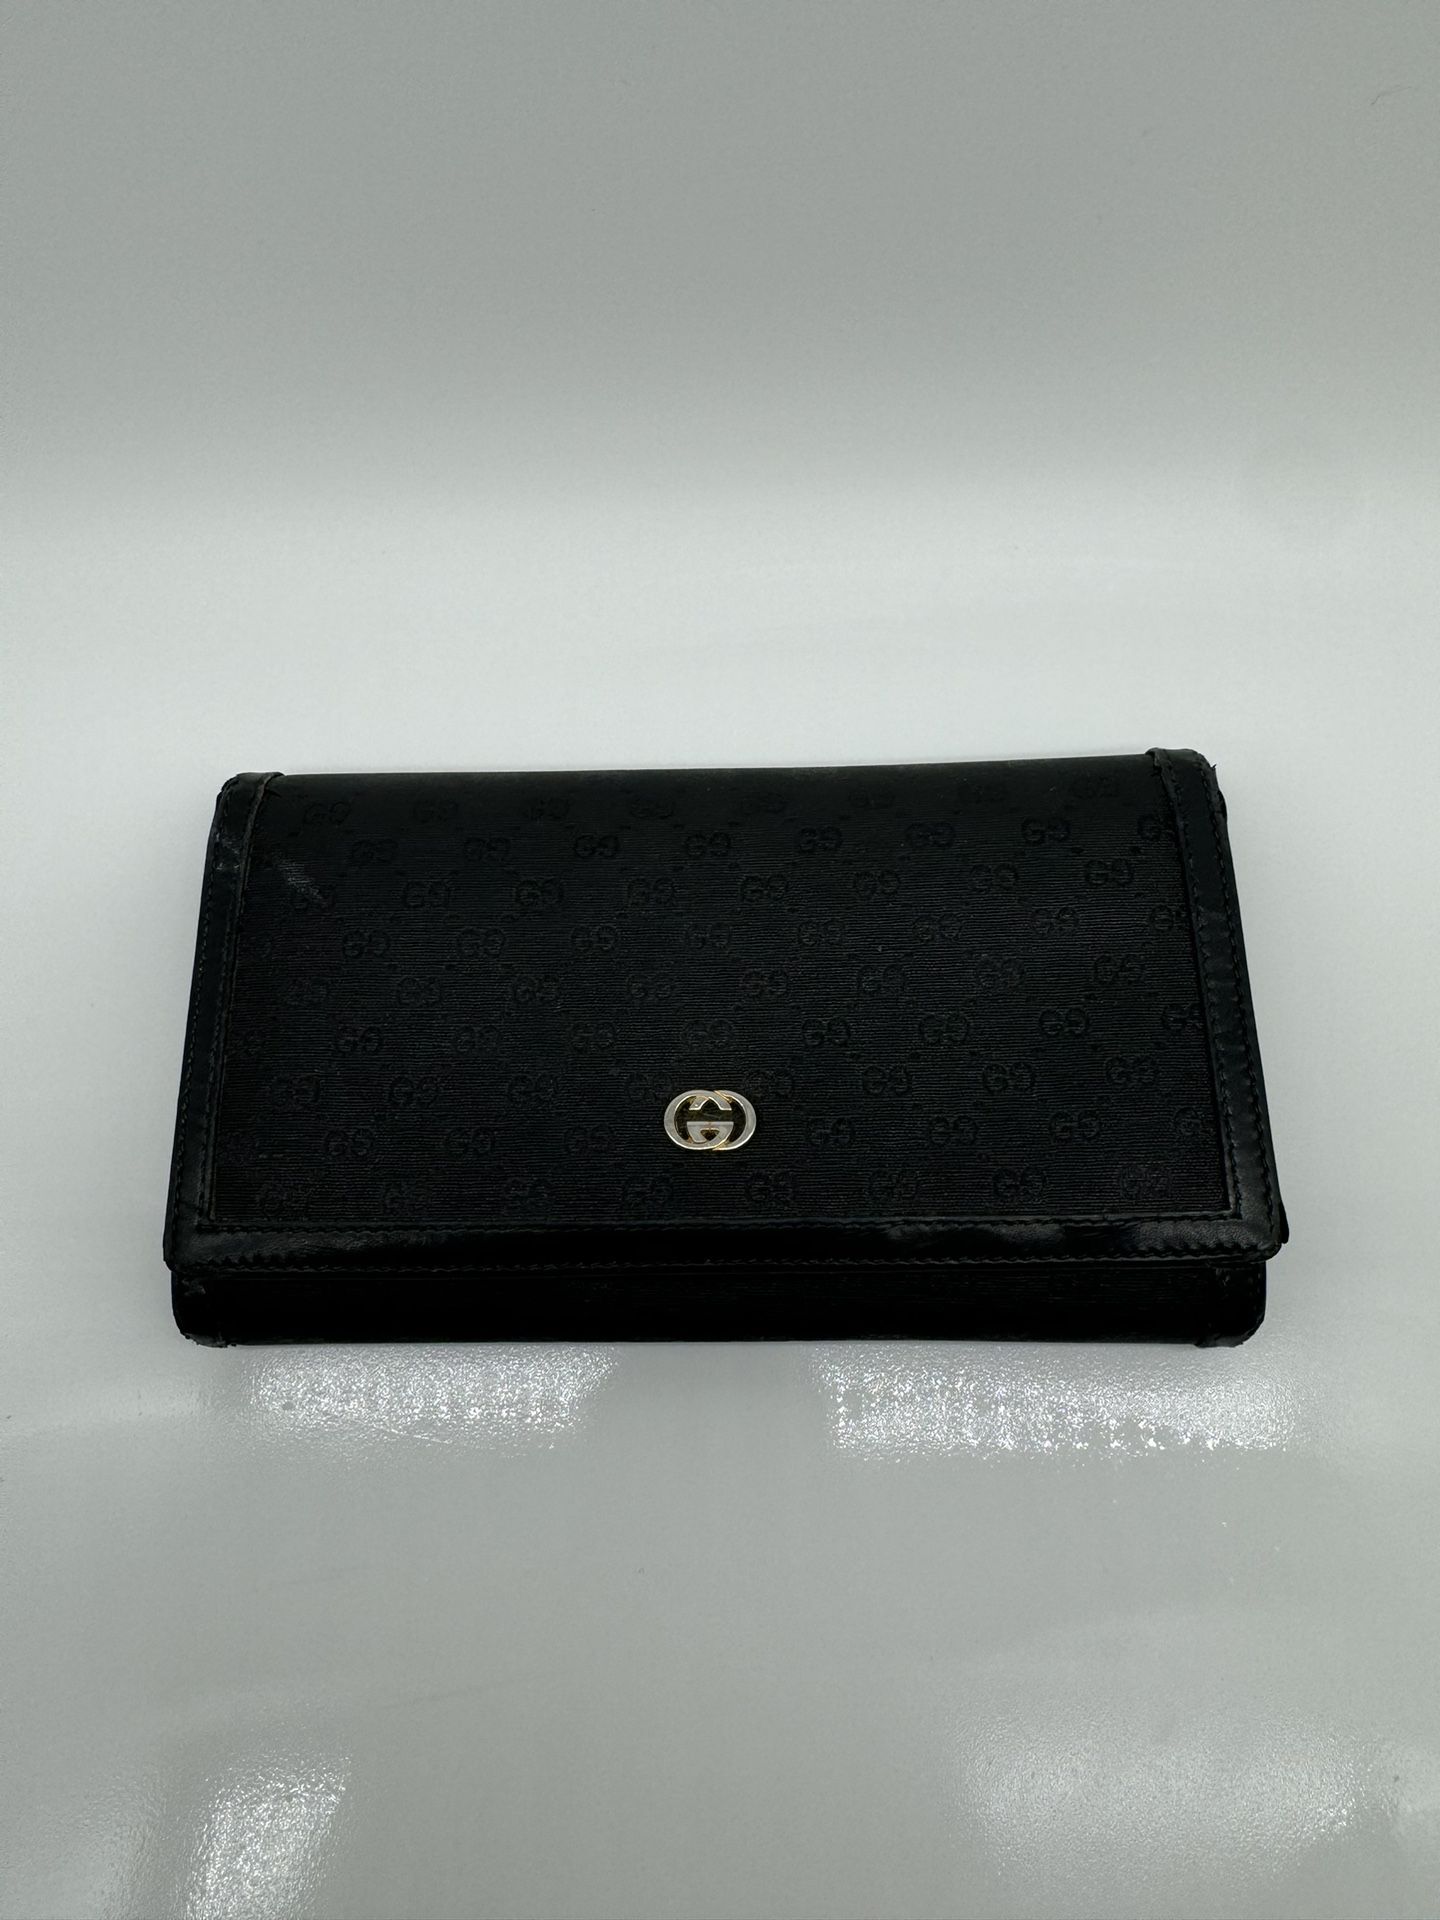 Authentic Gucci Black GG Canvas Monogram Leather Long Bi-fold Wallet